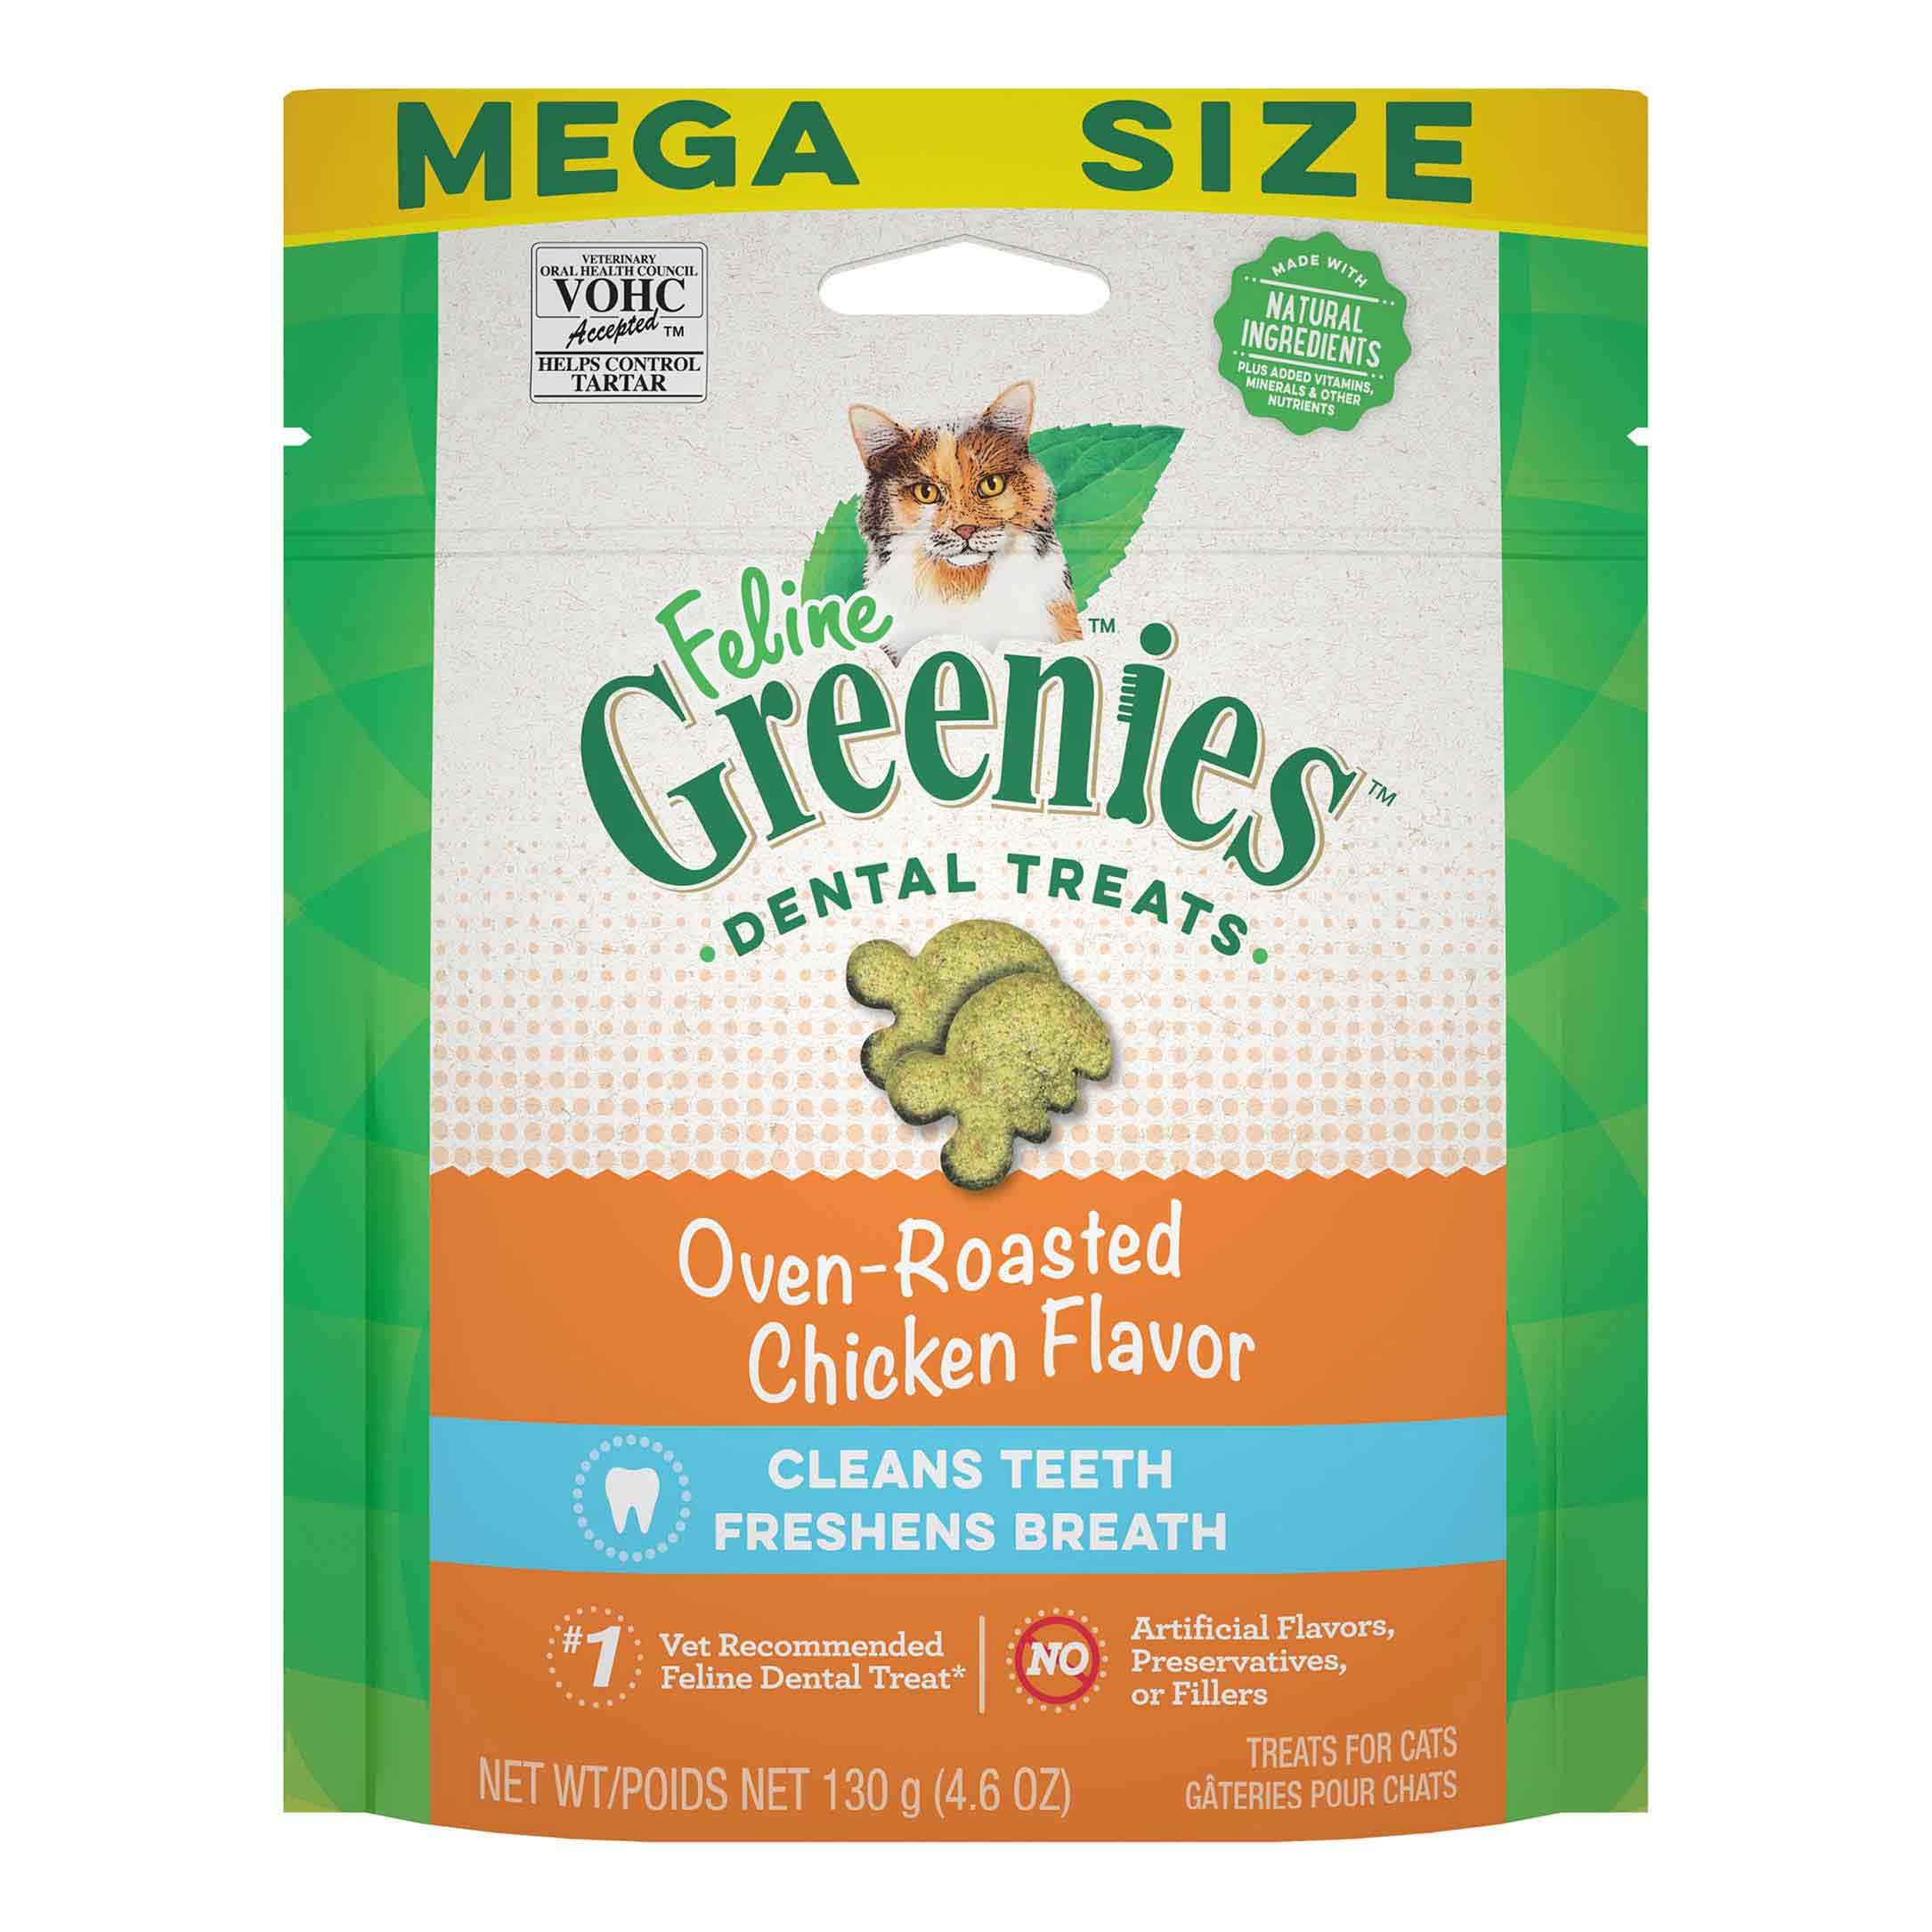 Feline Greenies Mega Size Chicken 4.6oz